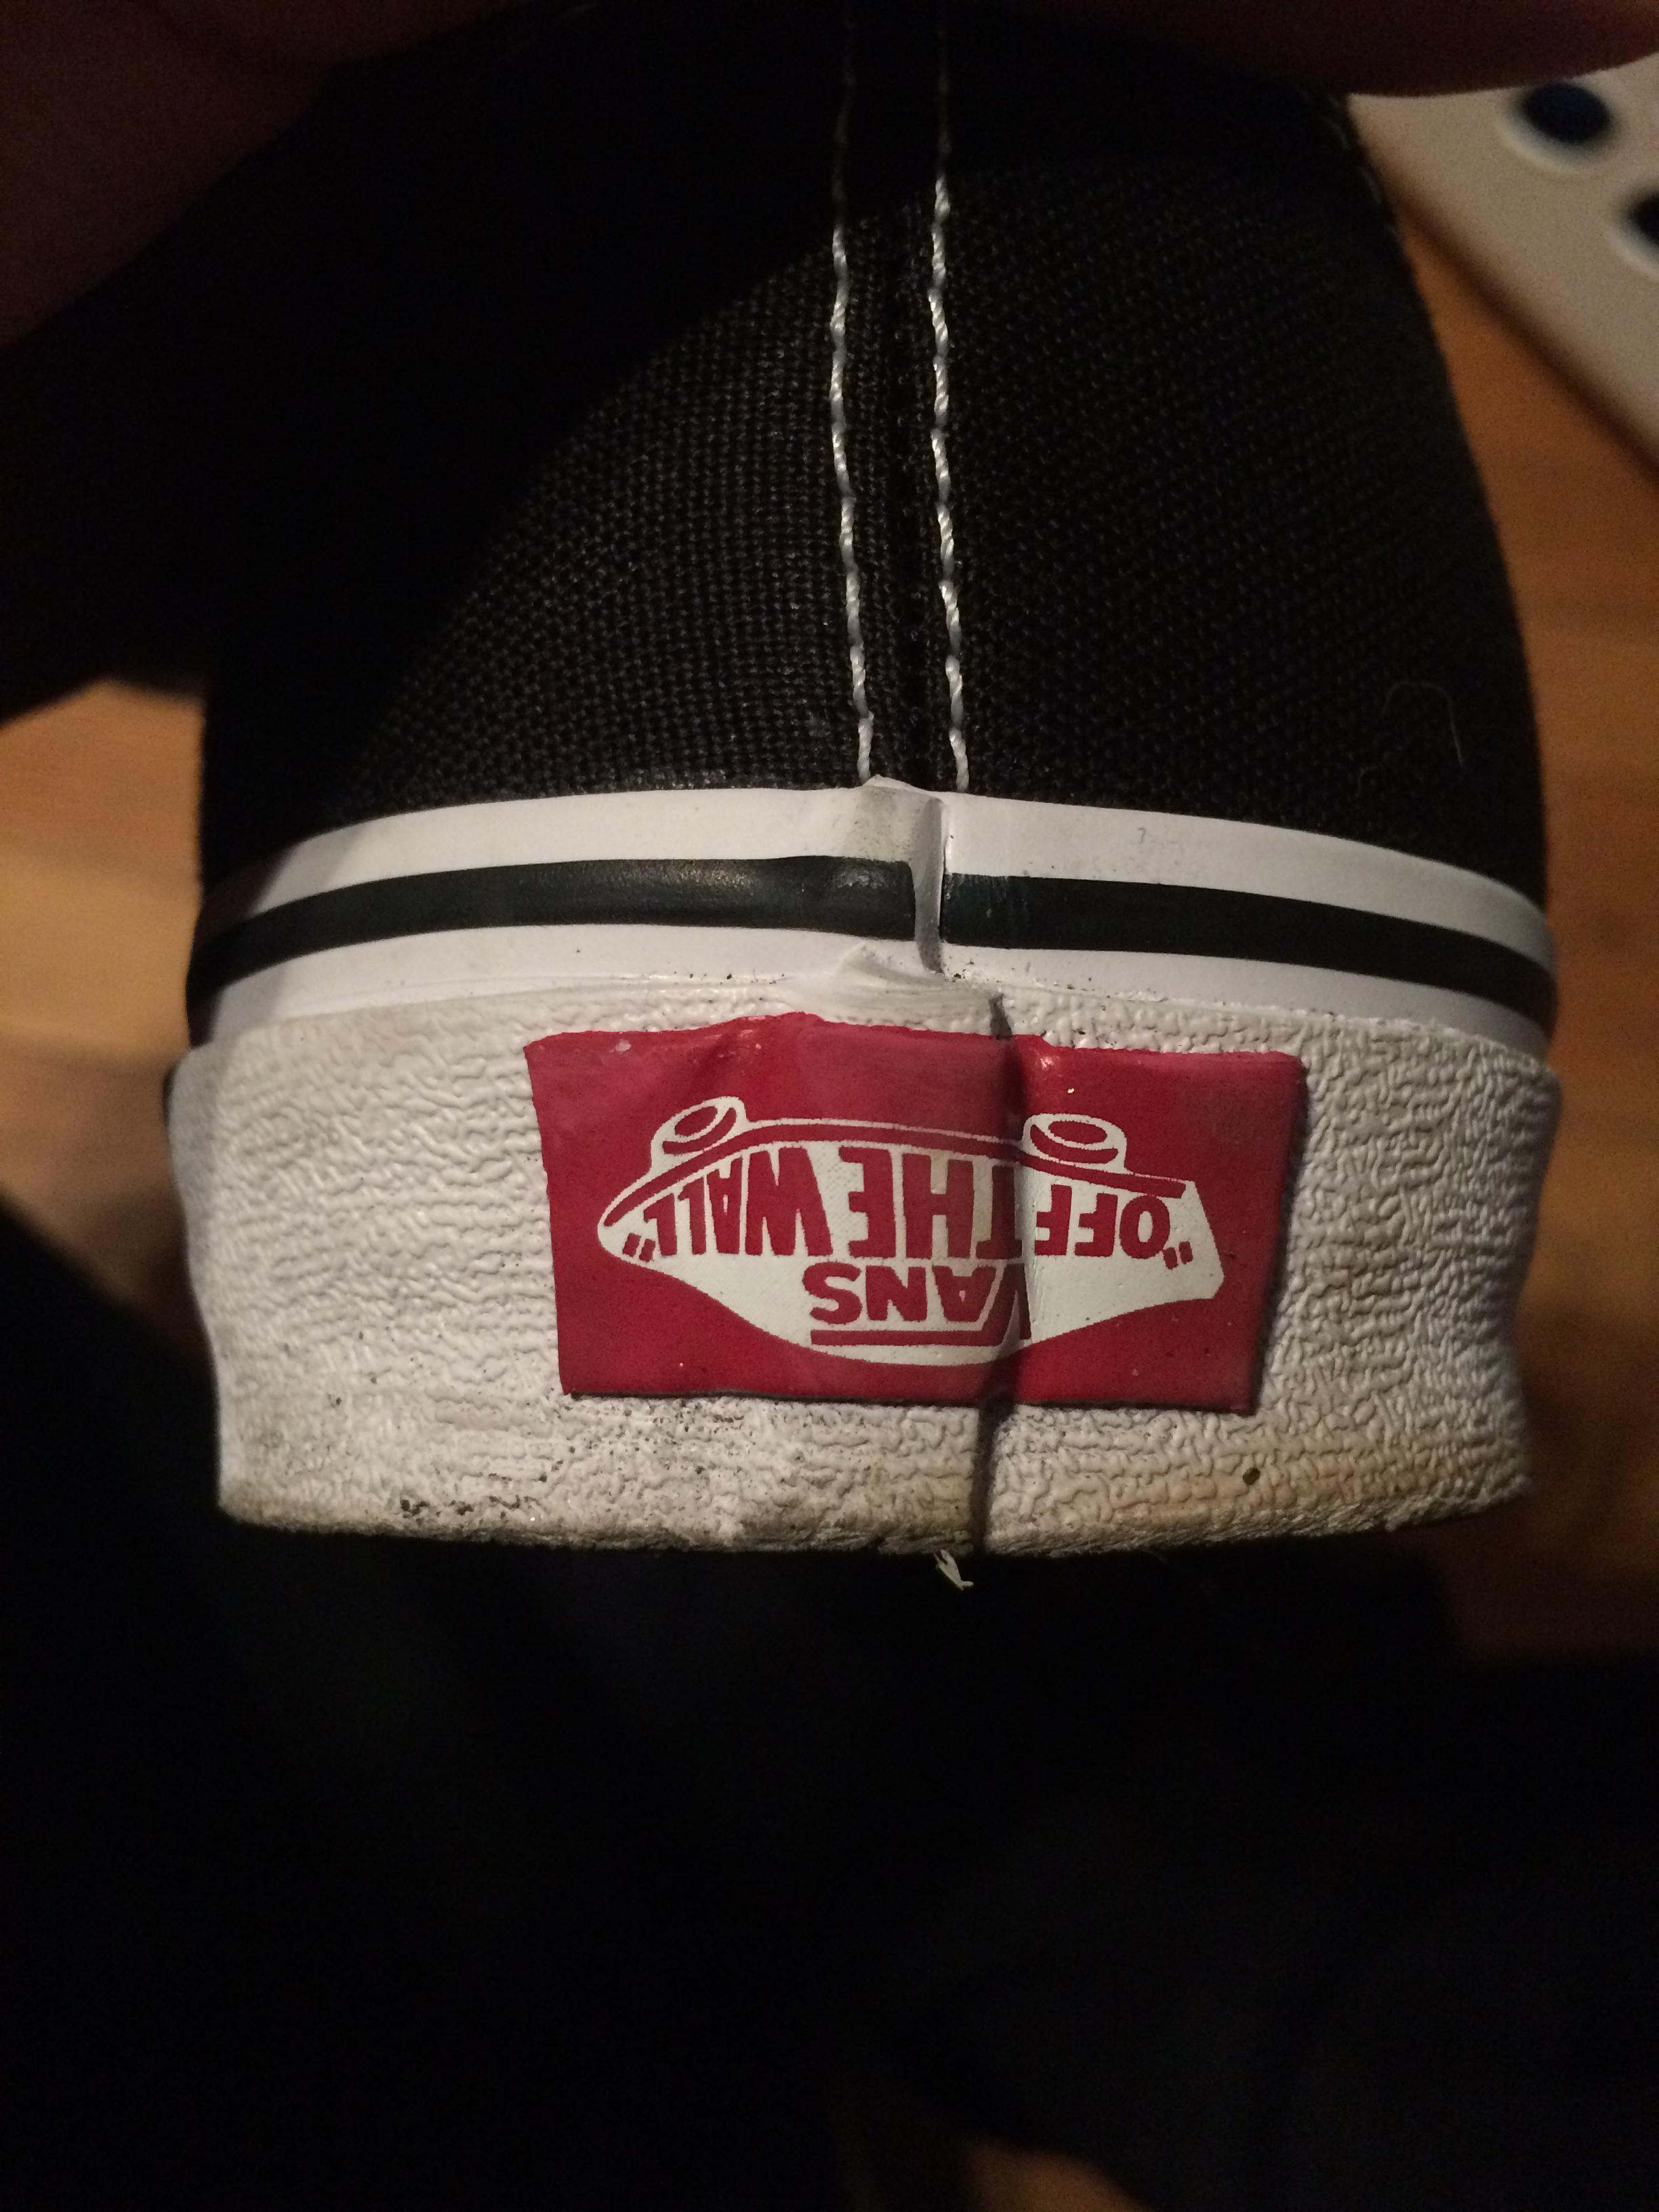 Fake Vans Logo - The Vans logo on my shoe is upside down : mildlyinteresting